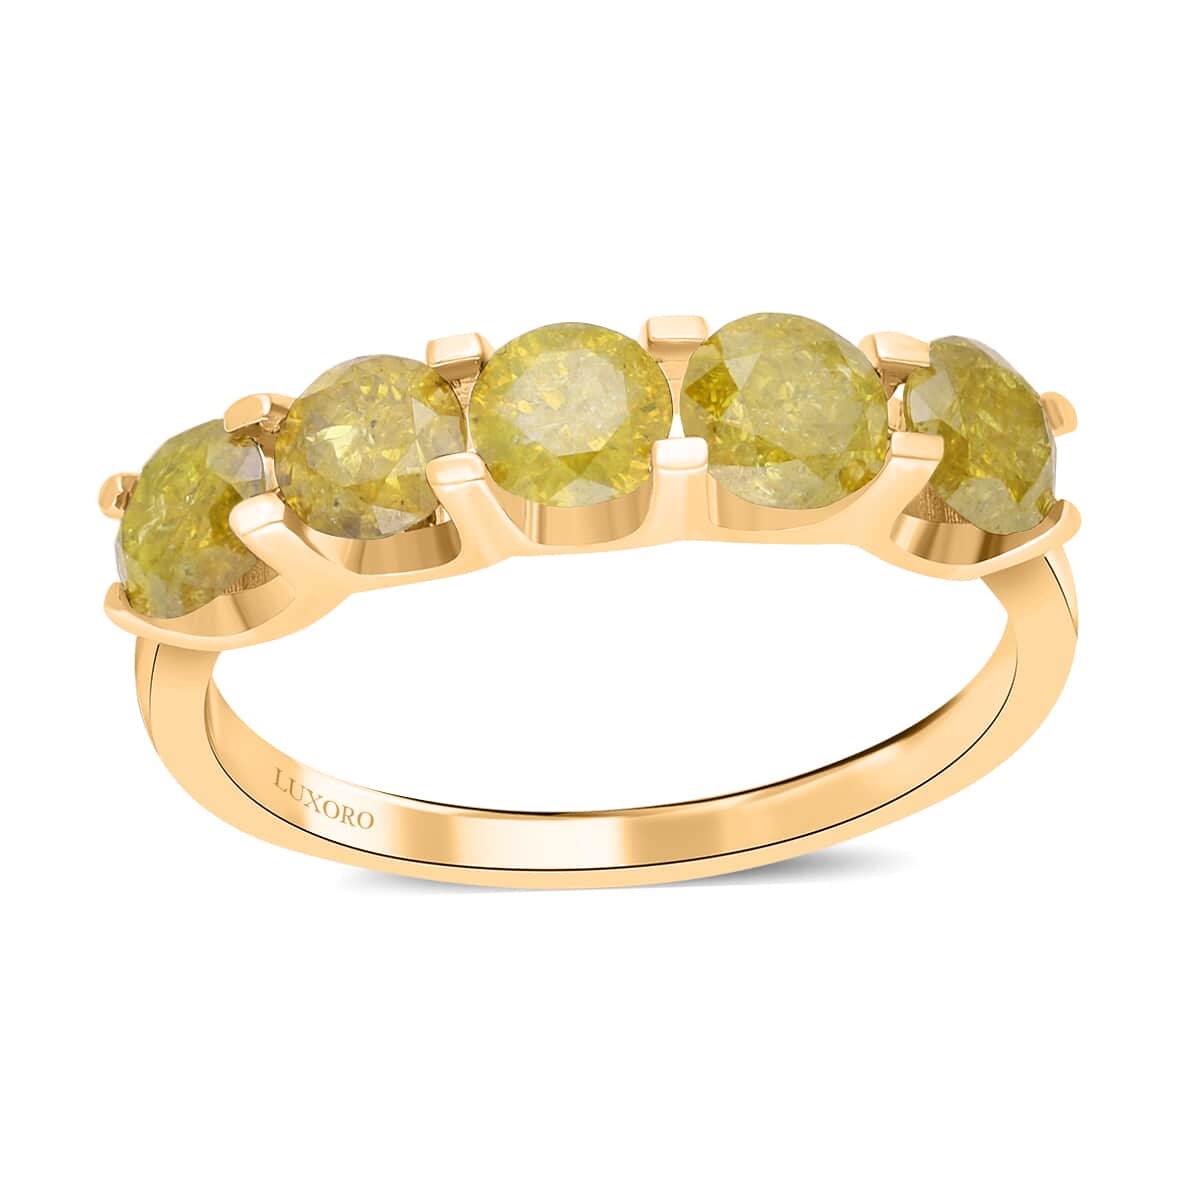 Luxoro 10K Yellow Gold Yellow Diamond 5 Stone Ring (Size 8.0) 2.00 ctw image number 0